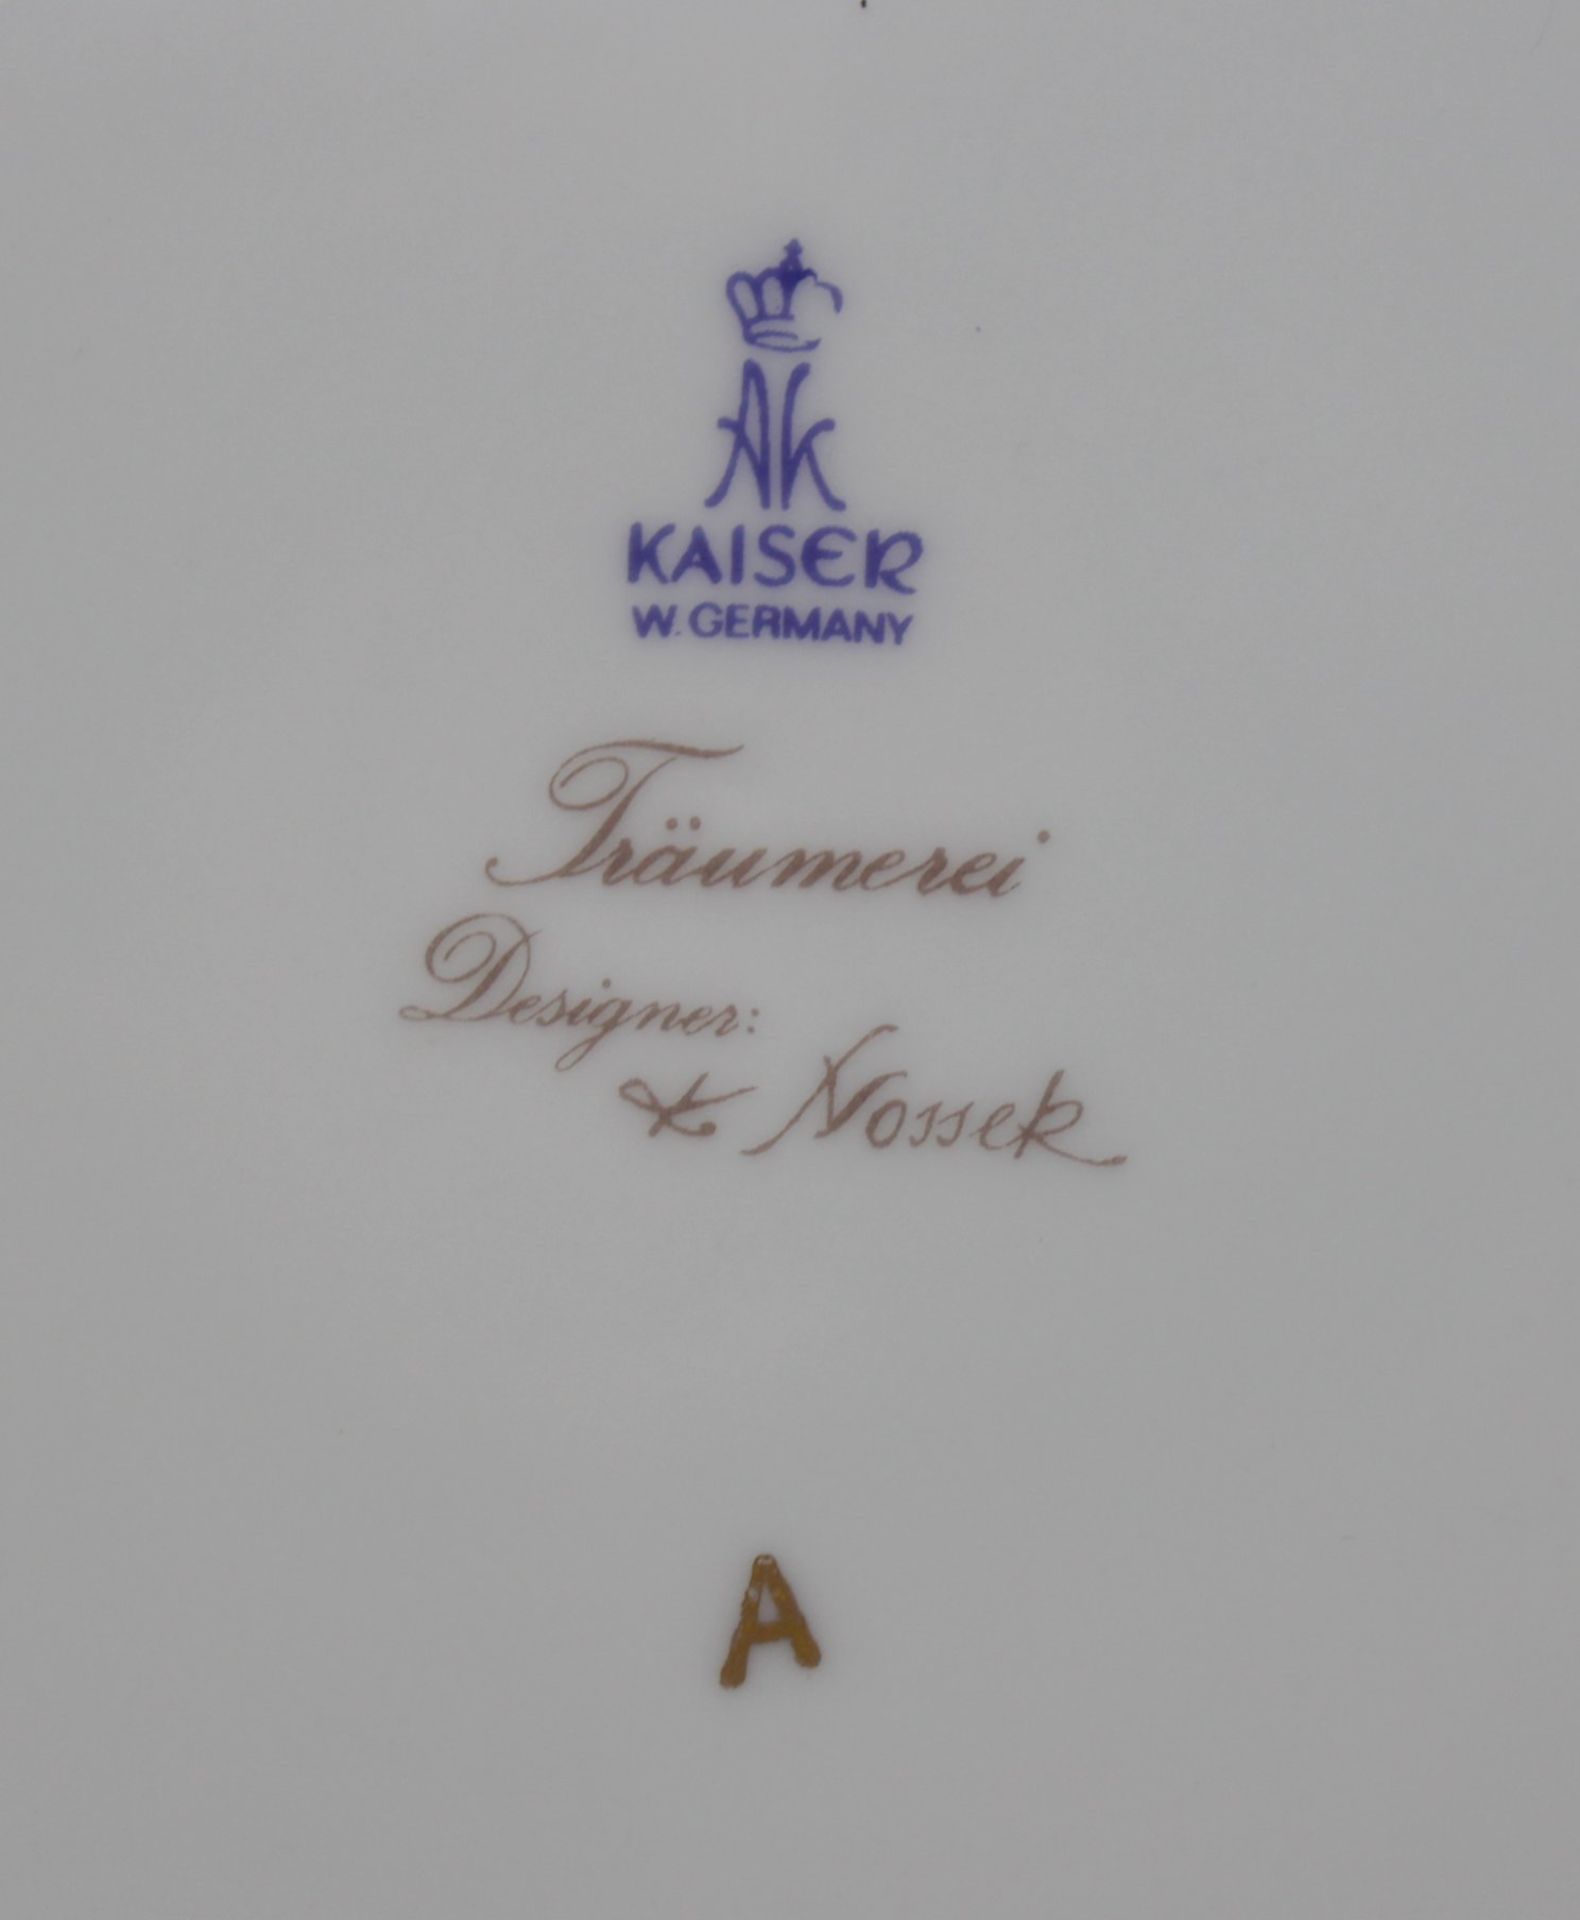 Wandteller, Kaiser, betitelt "Träumerei", Design. Nossek, D-30,5cm. - Bild 2 aus 2